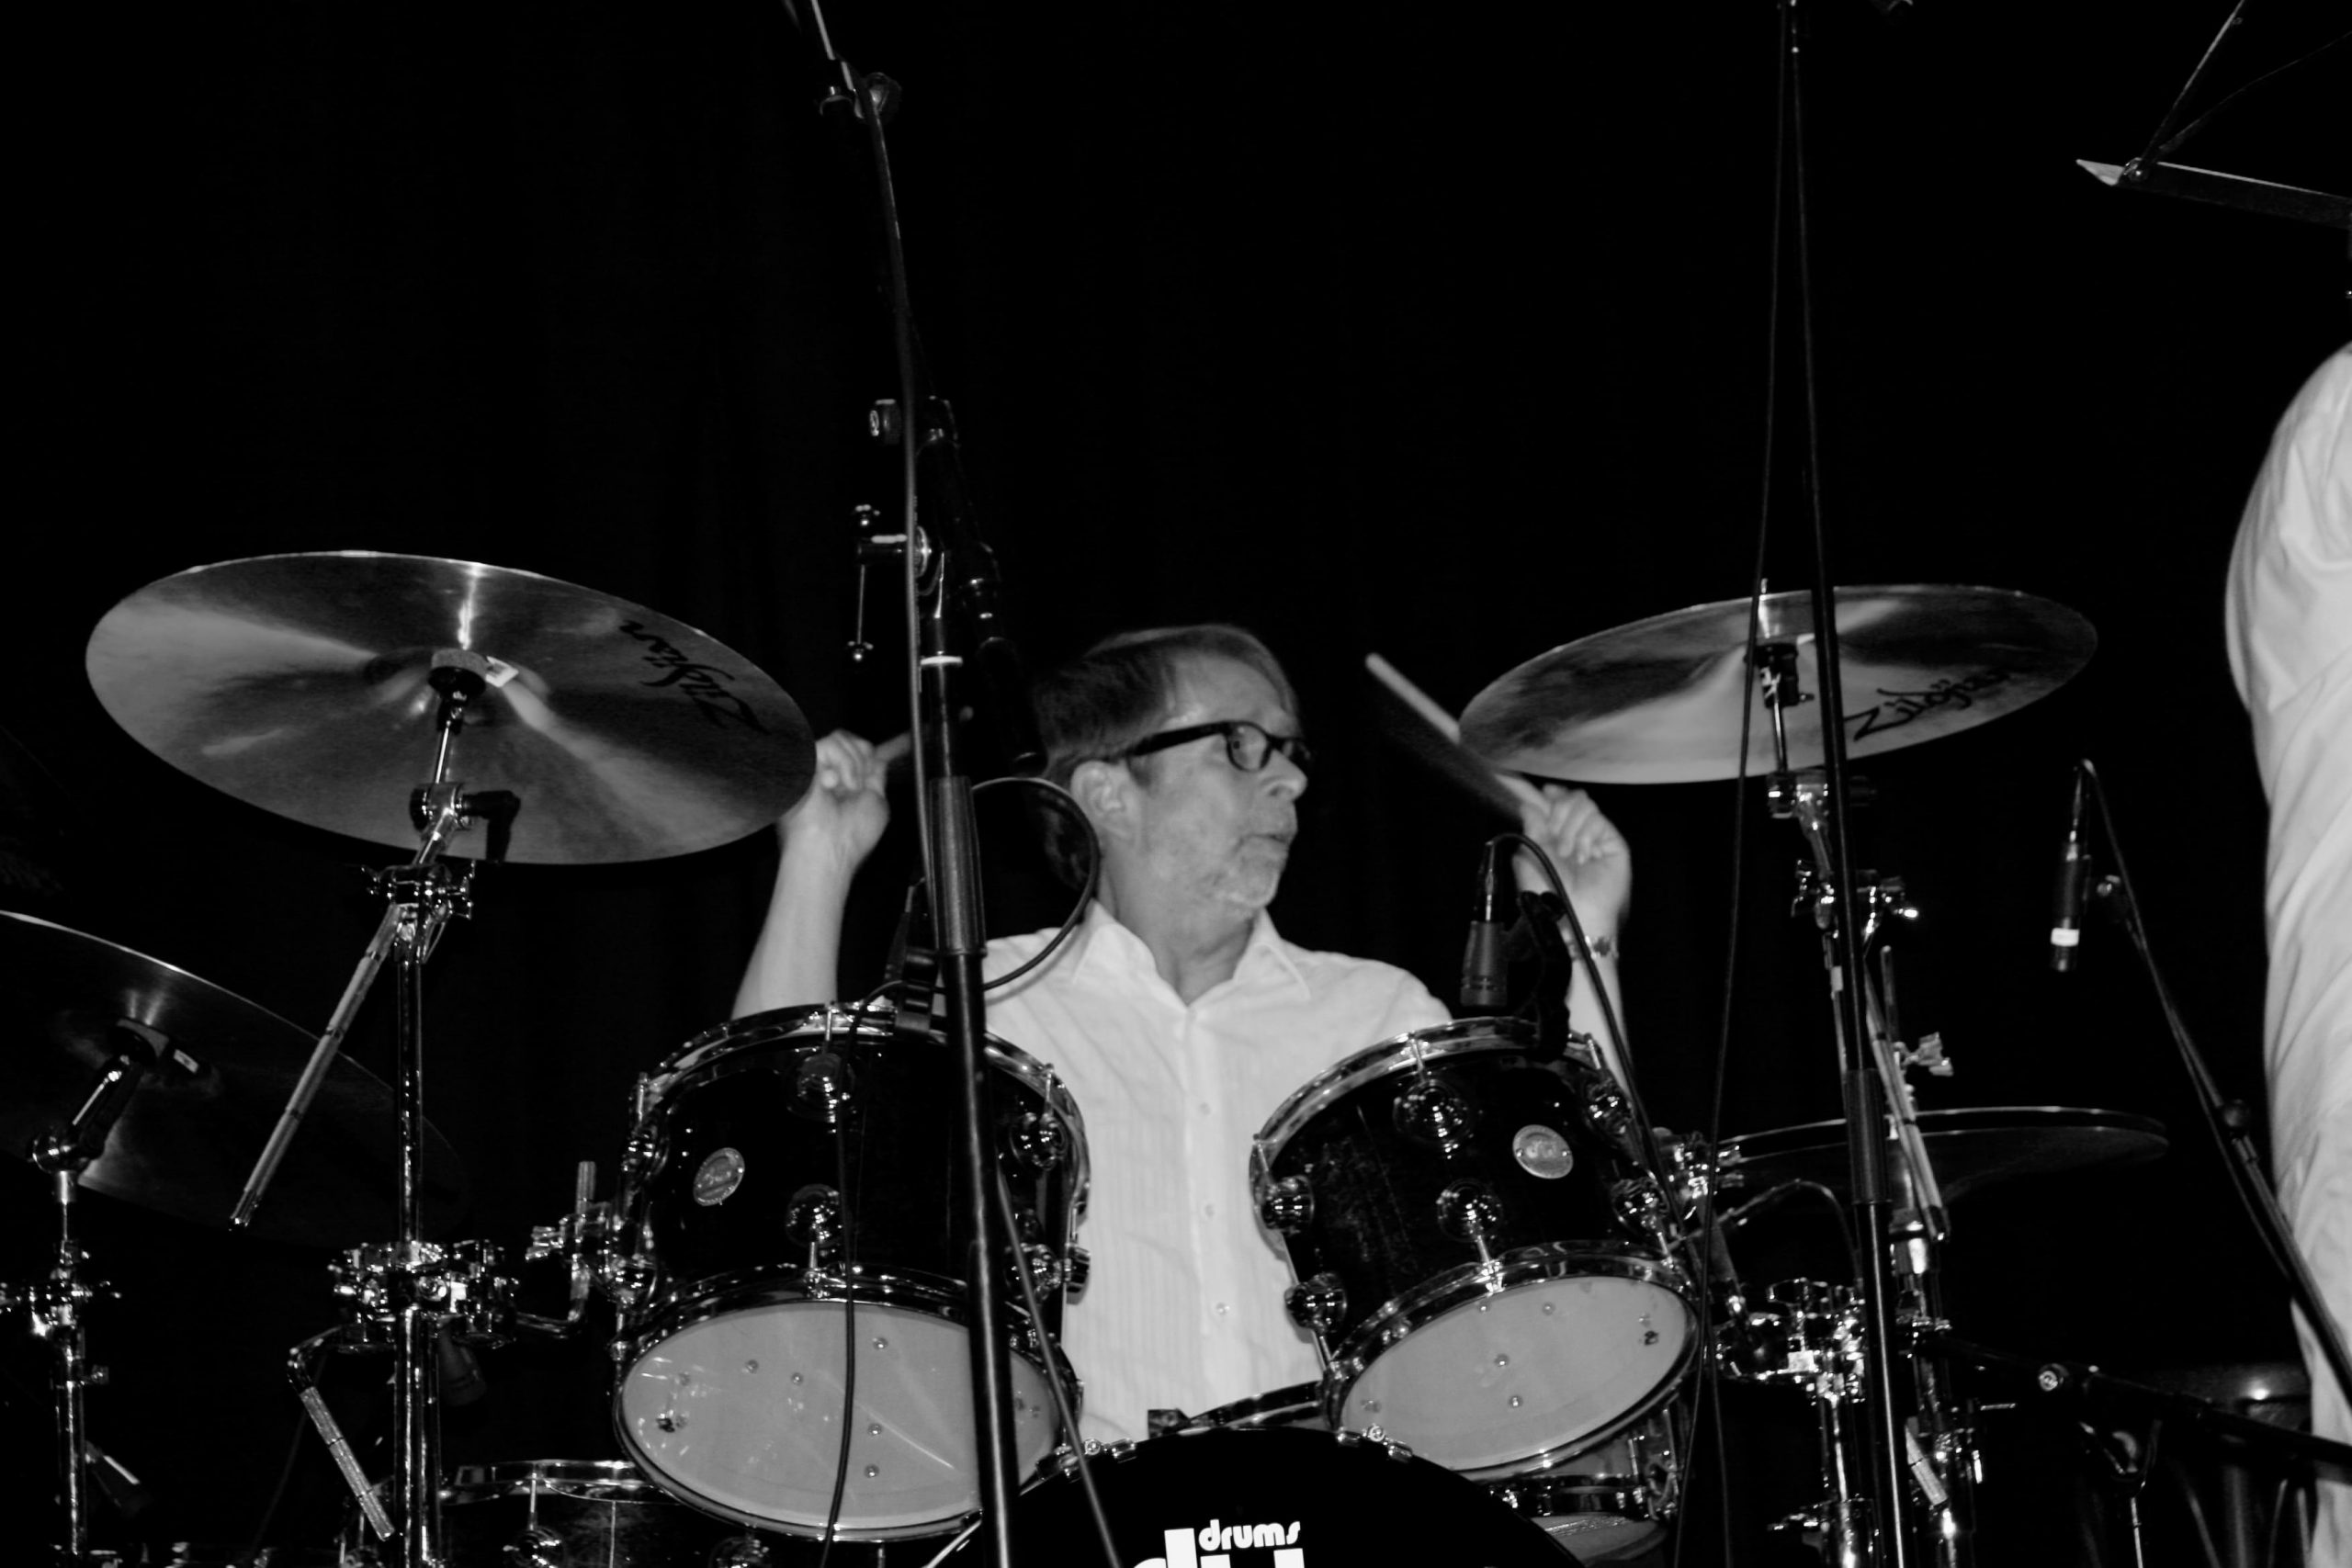 Drummer Curt Cress